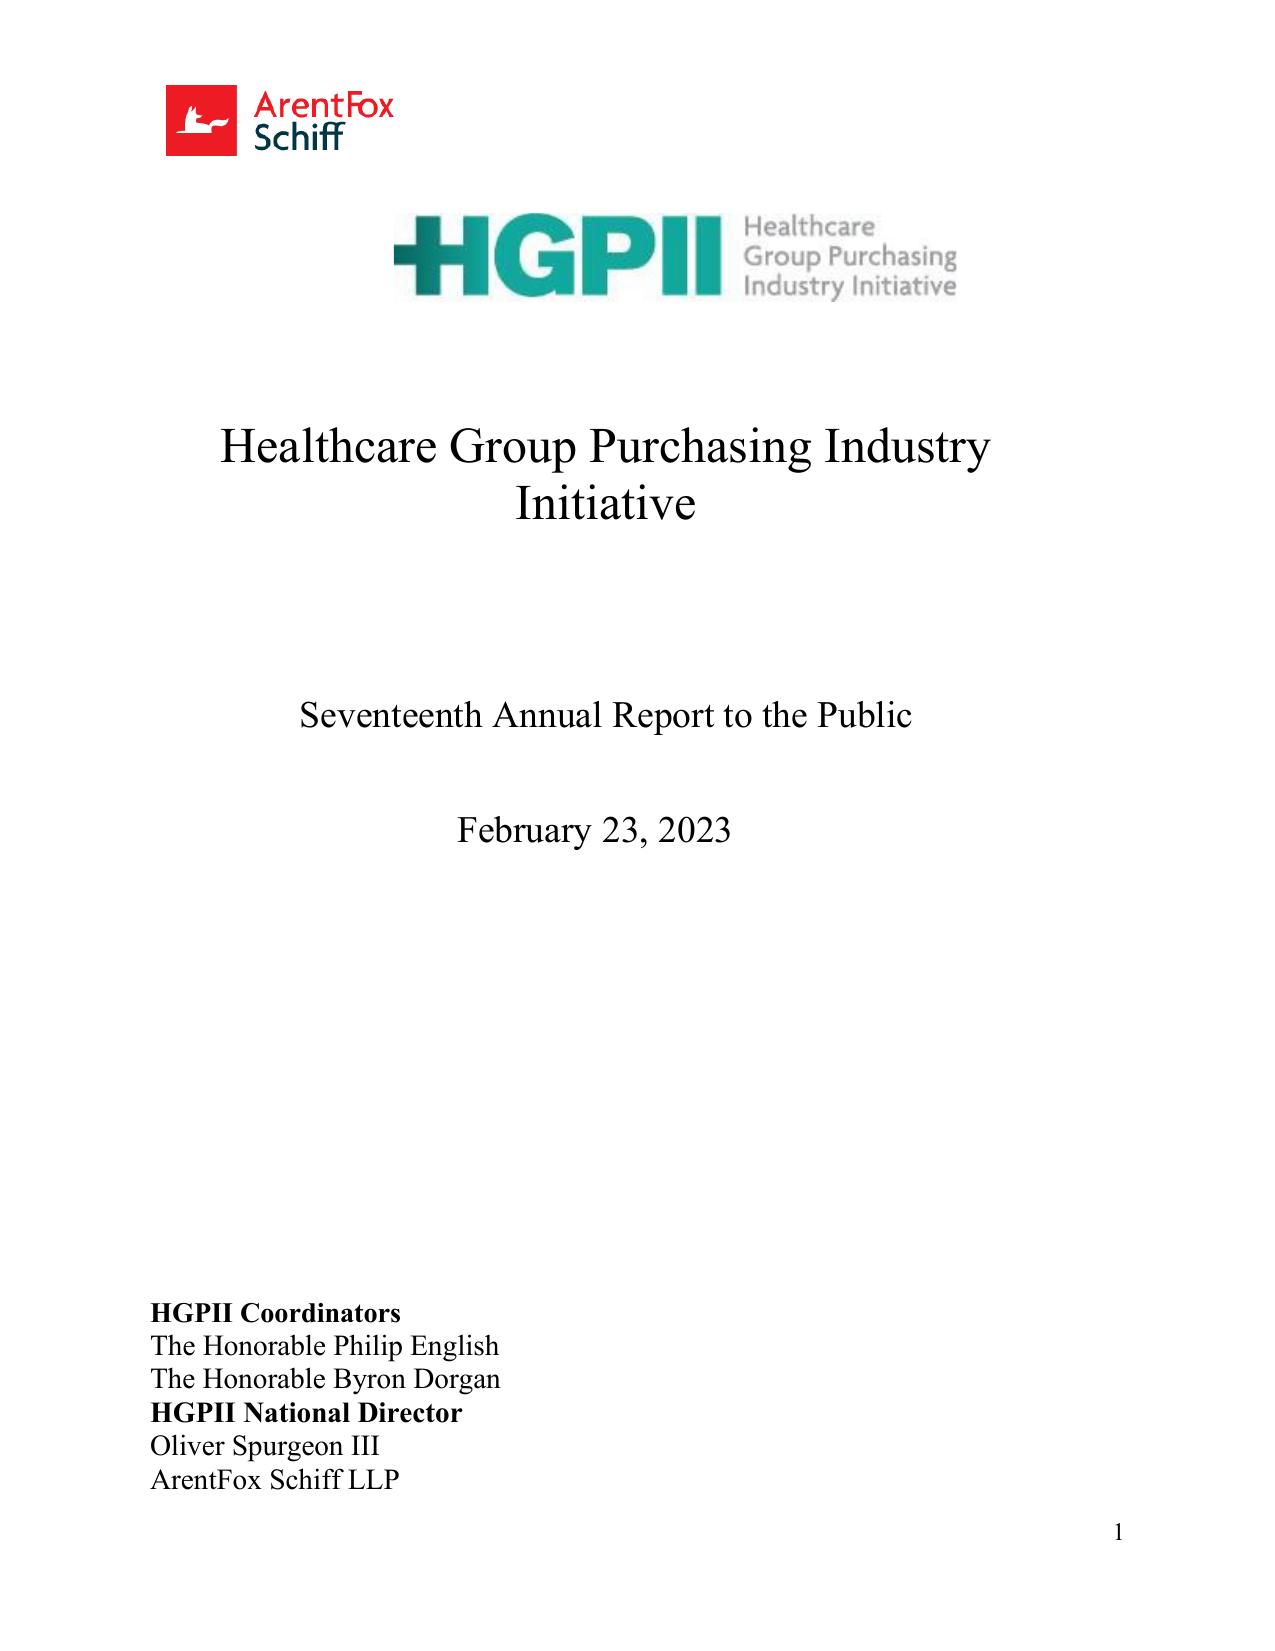 HEALTHTRUSTPG 2023 Annual Report